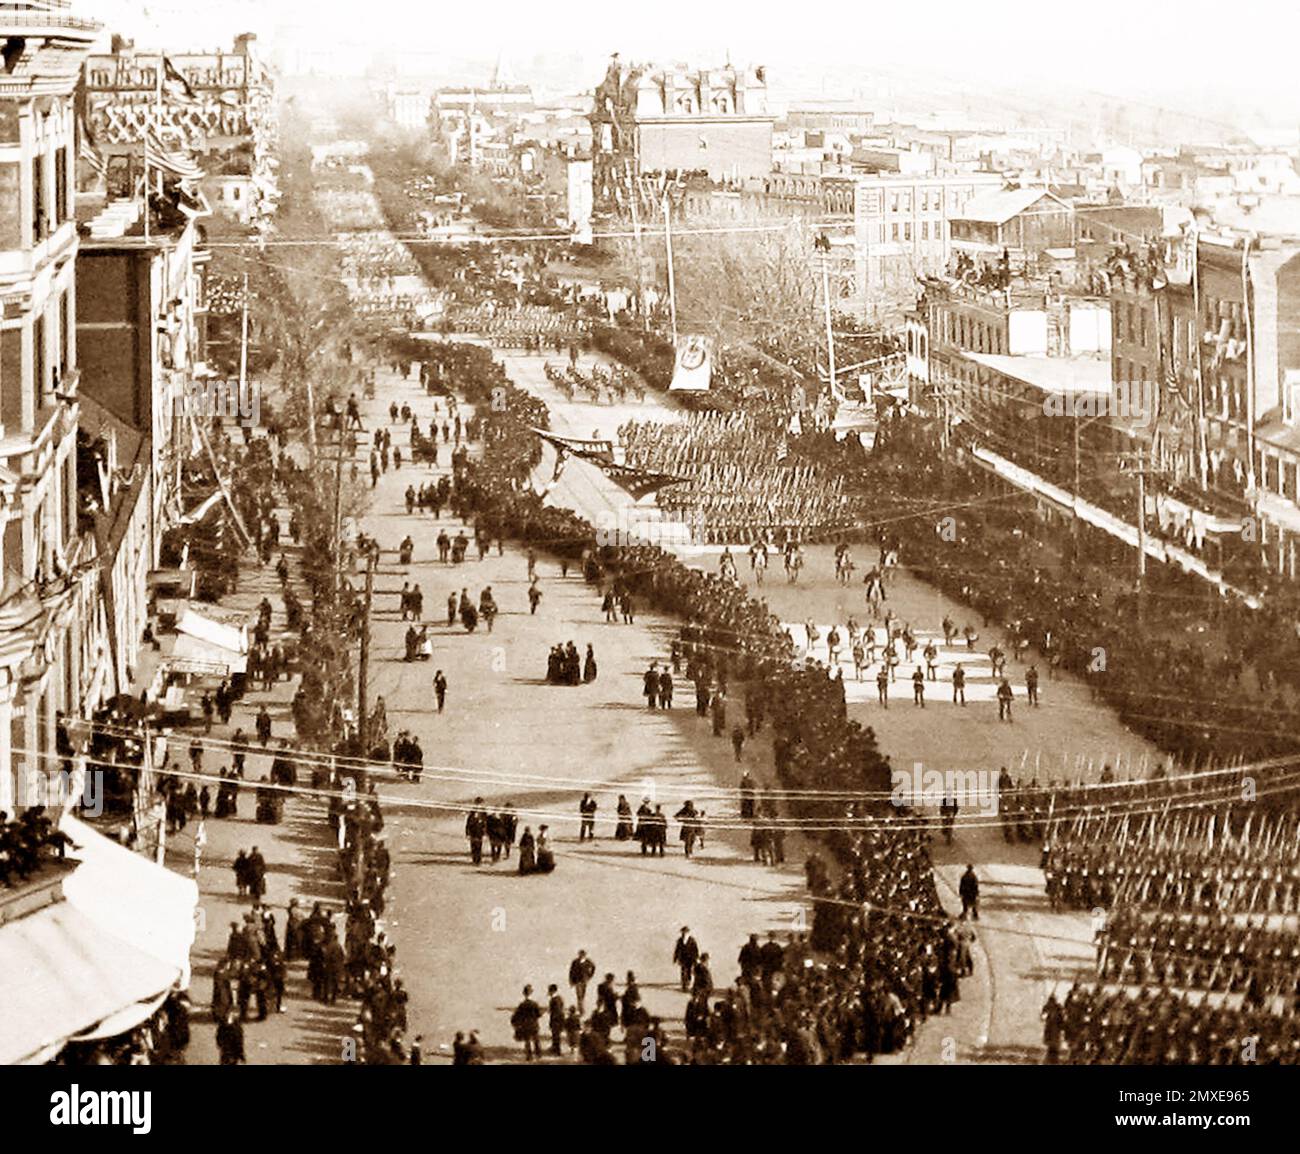 Inauguration of President Grover Cleveland, Washington DC, USA, in 1885 Stock Photo